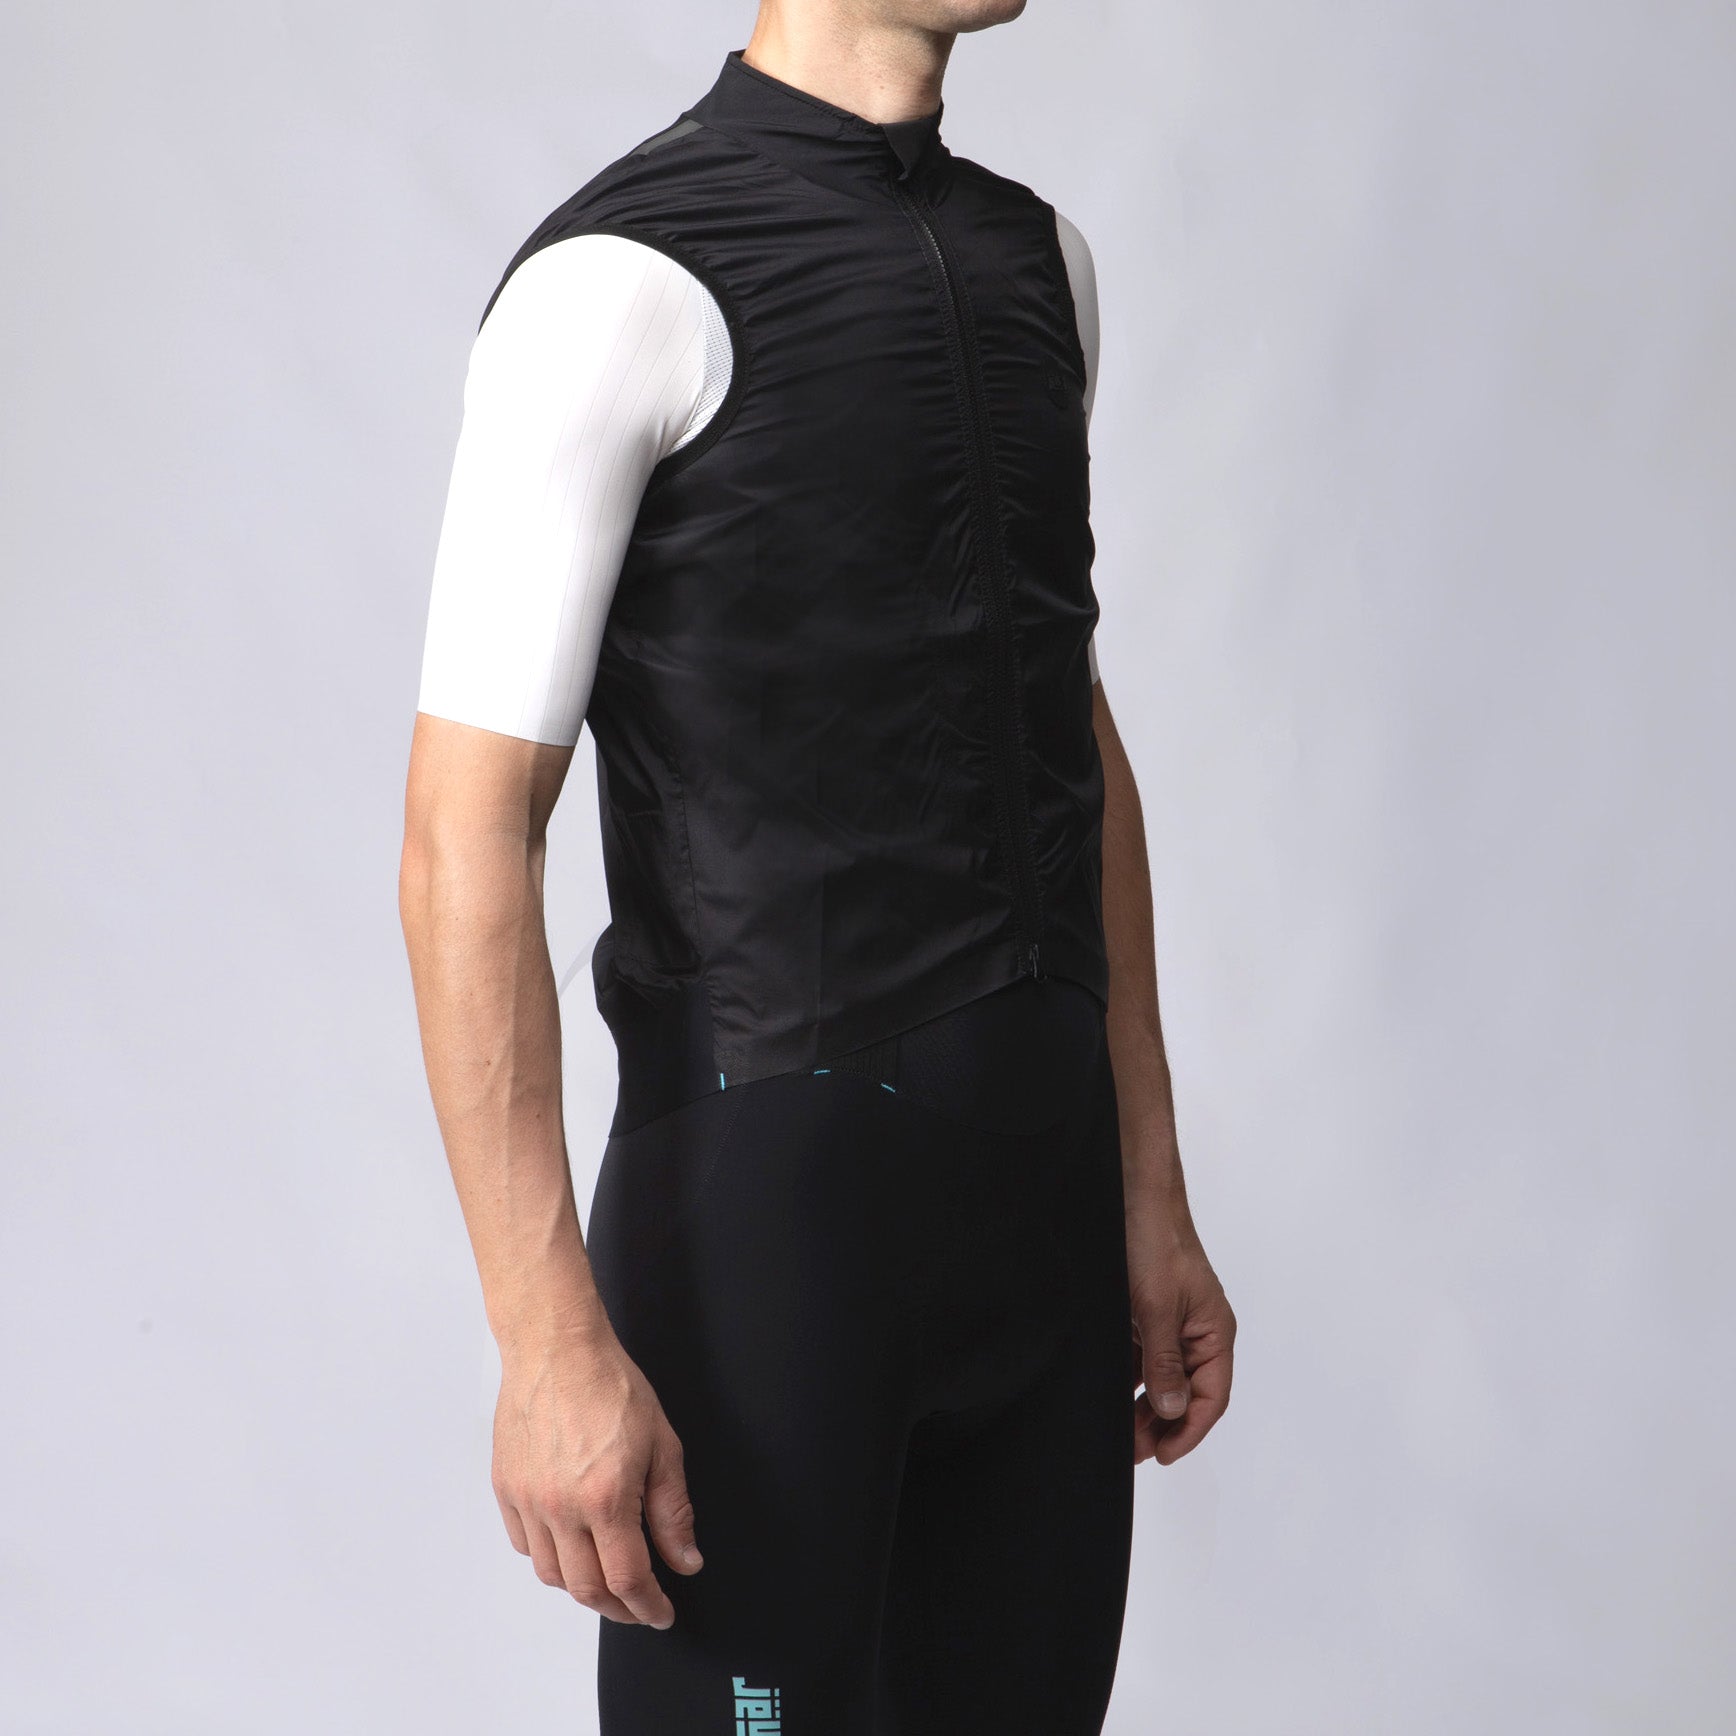 Jëuf Pro Windproof Pertex Vest - Black